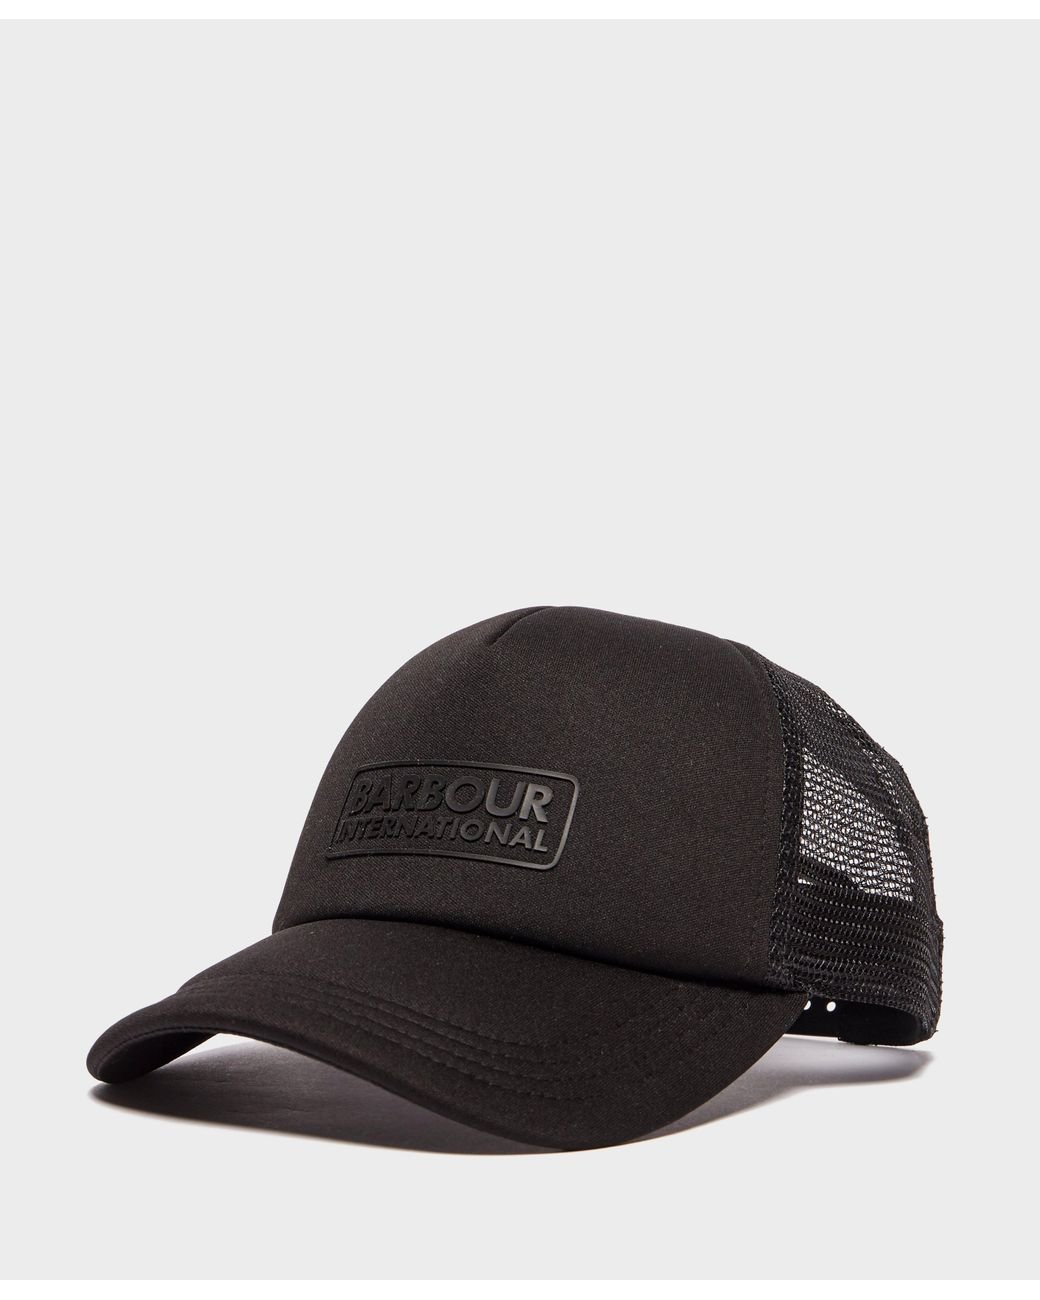 black barbour hat